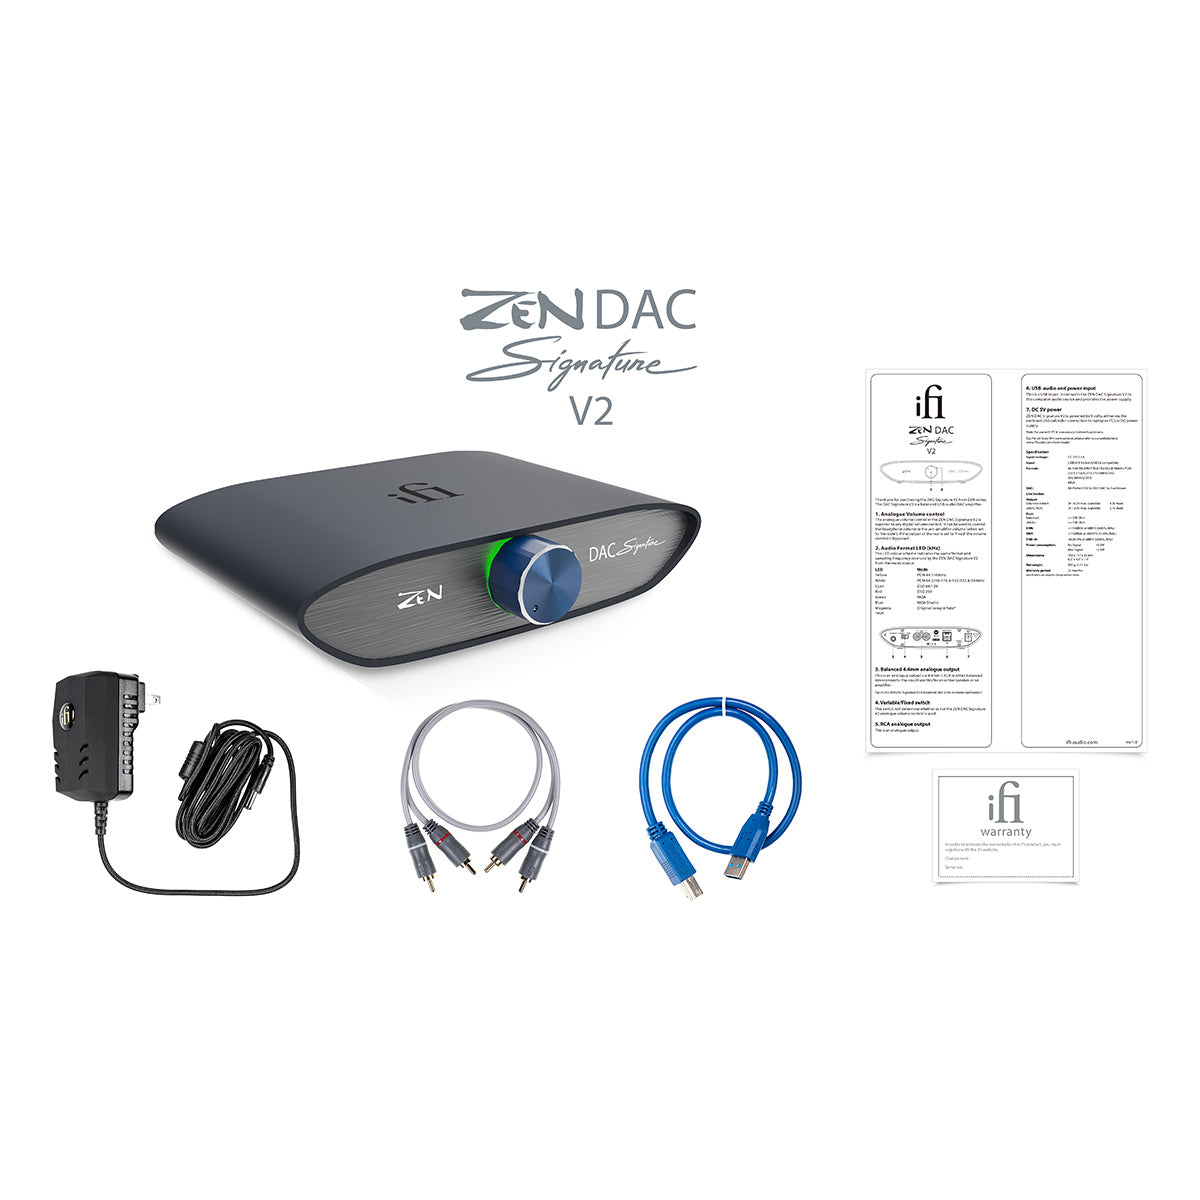 ifi Zen DAC V2 upgraded version of USB DAC with headphone